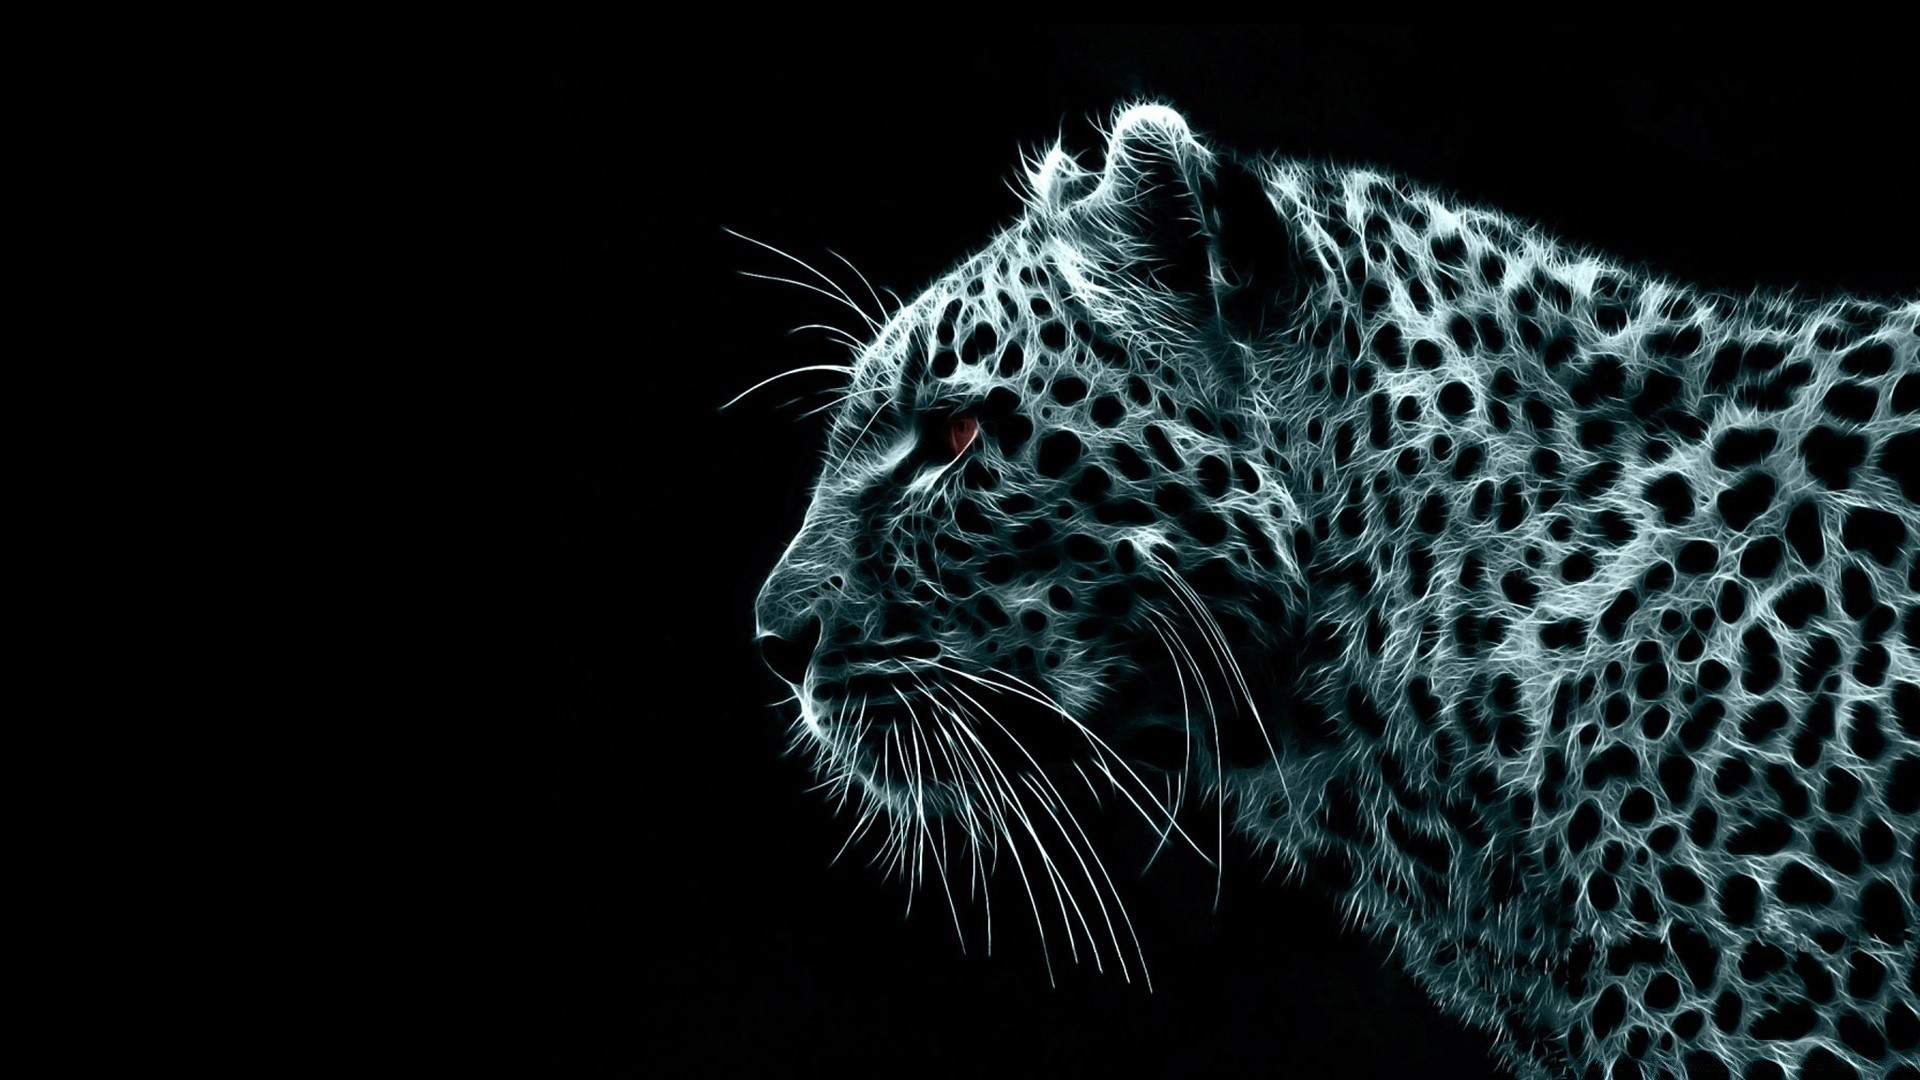 black cat wildlife danger animal leopard predator